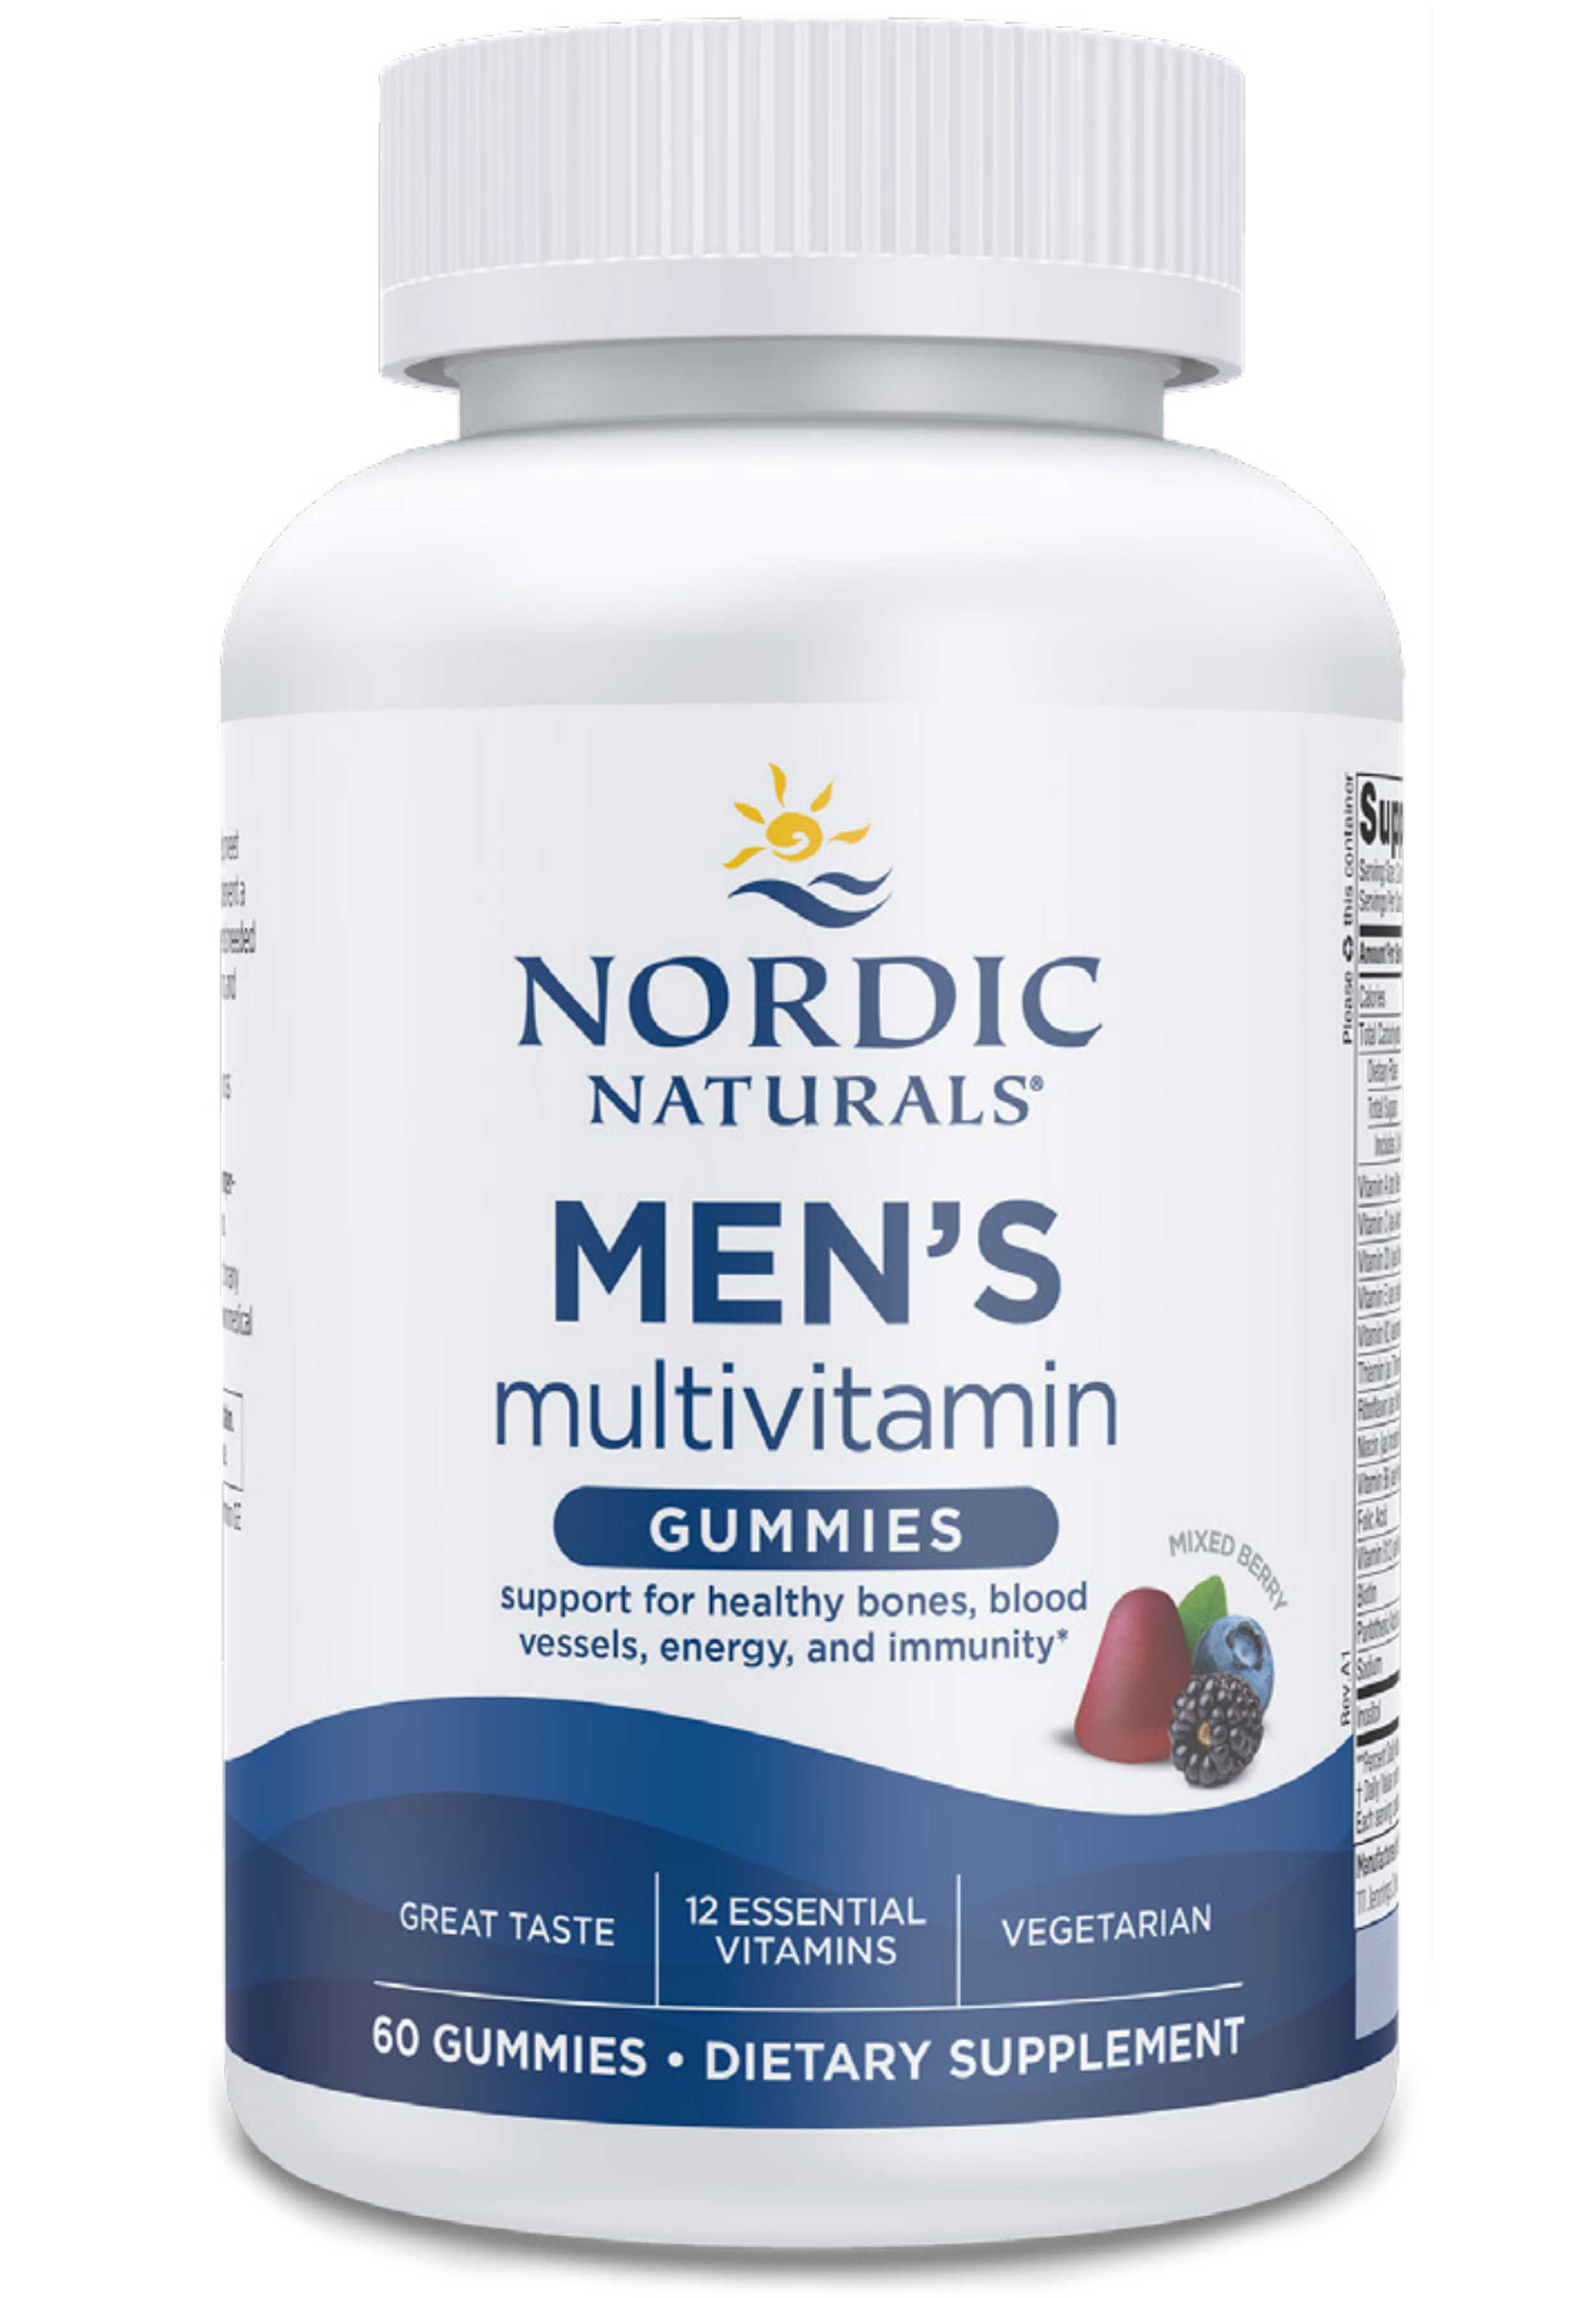 Nordic Naturals Men's Multivitamin Gummies